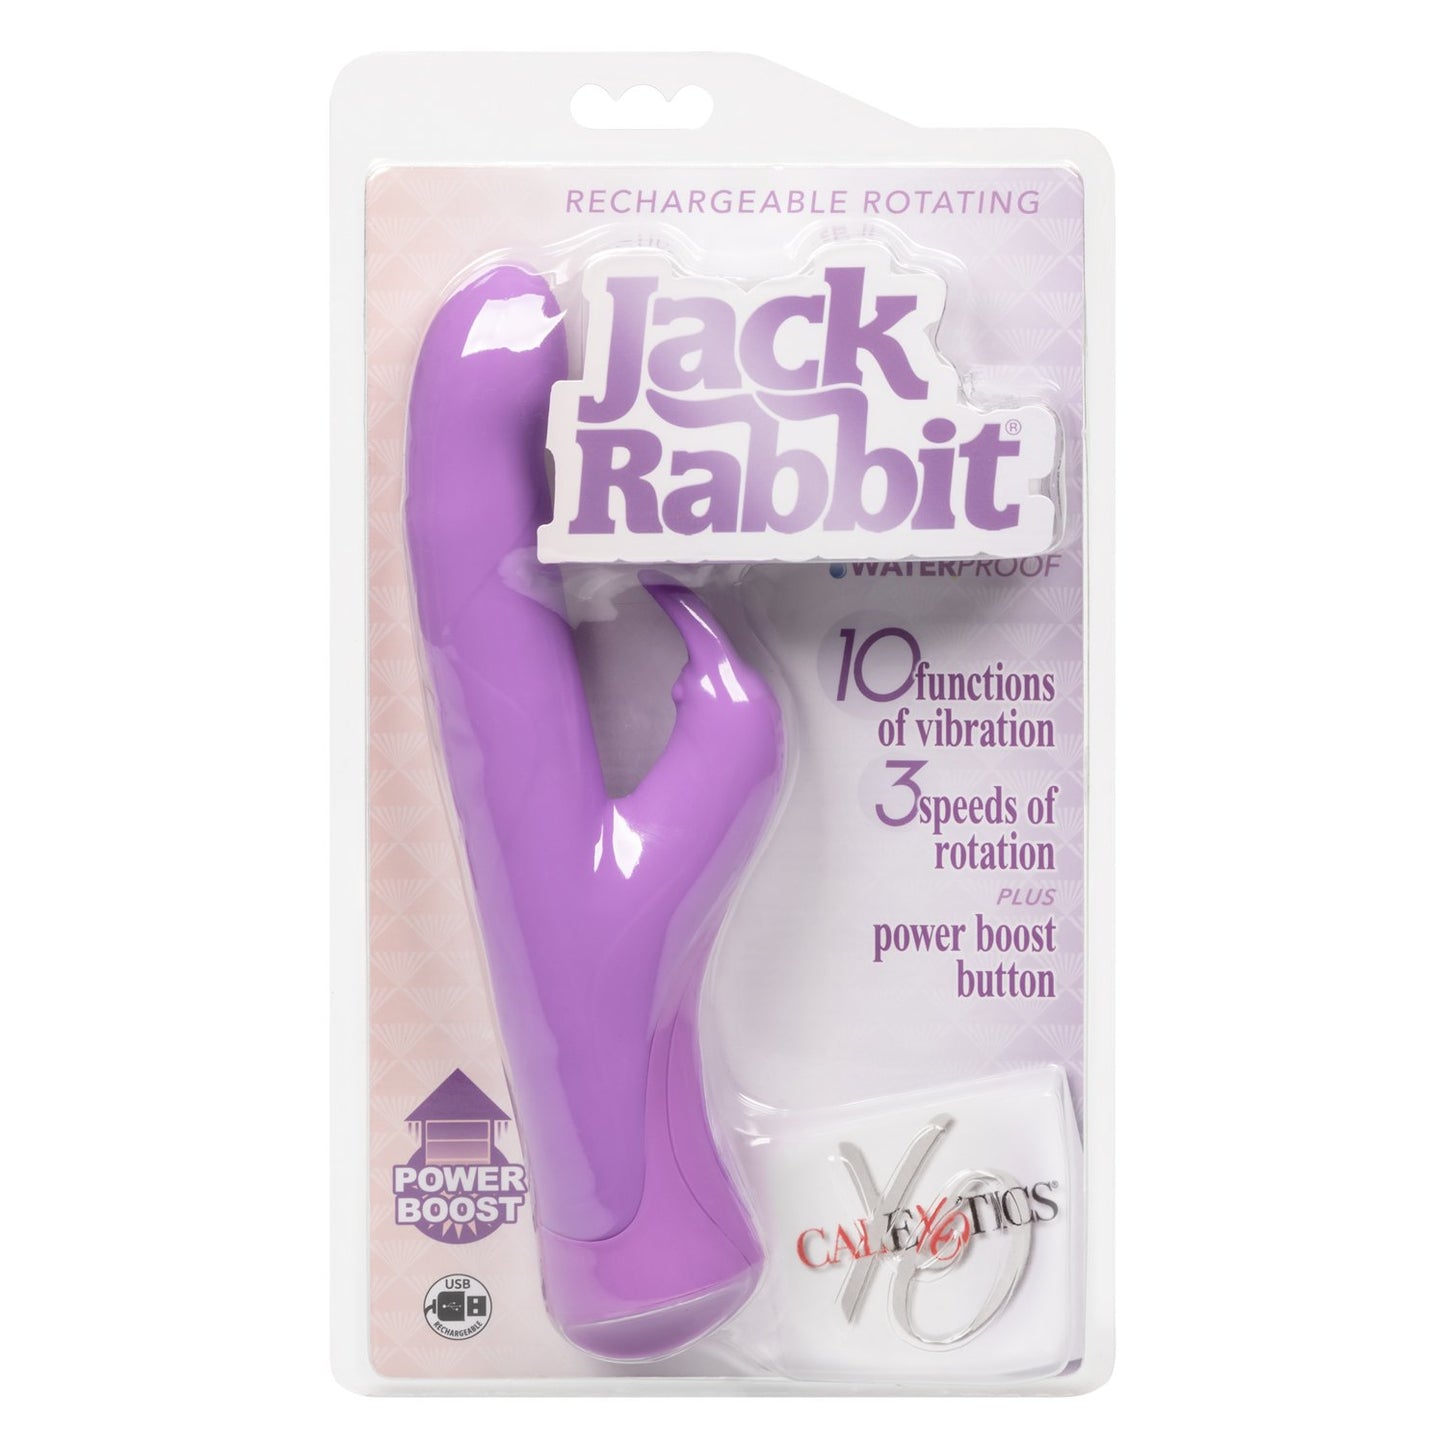 Jack Rabbit Rechargeable Rotating Jack Rabbit